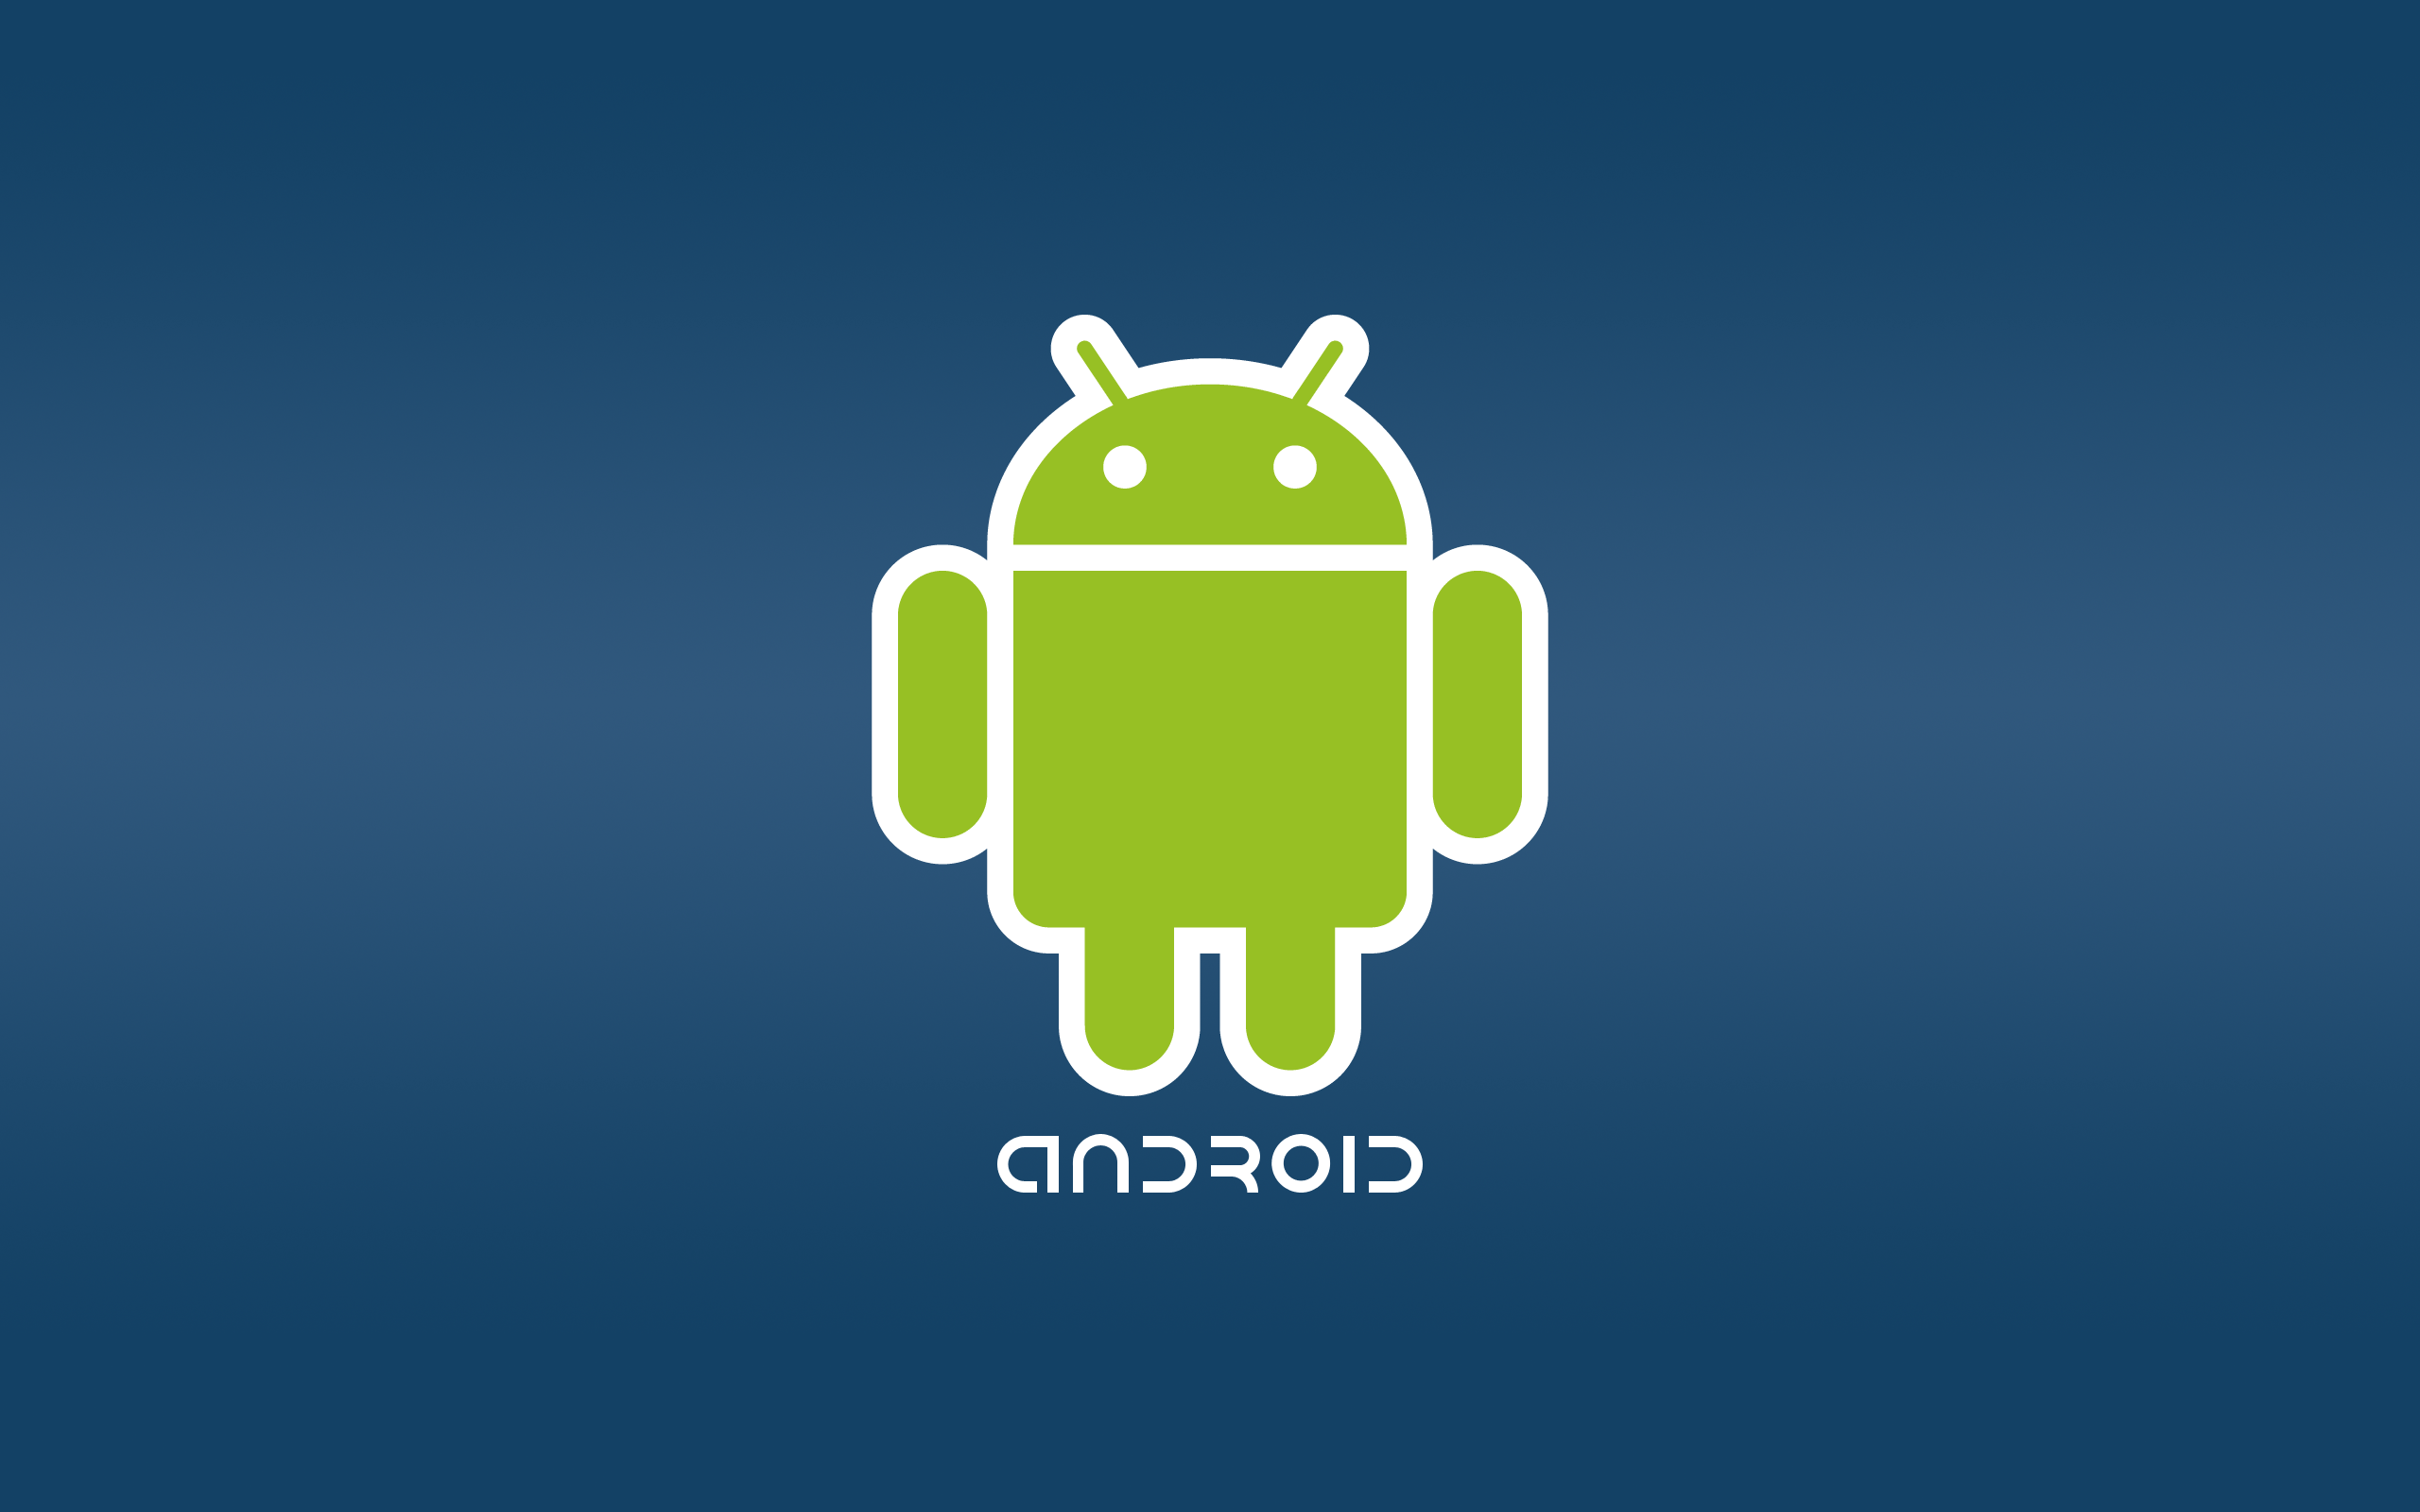 Версия для android телефон. Логотип андроид. ОС андроид. Операционная система андроид. Андорит.